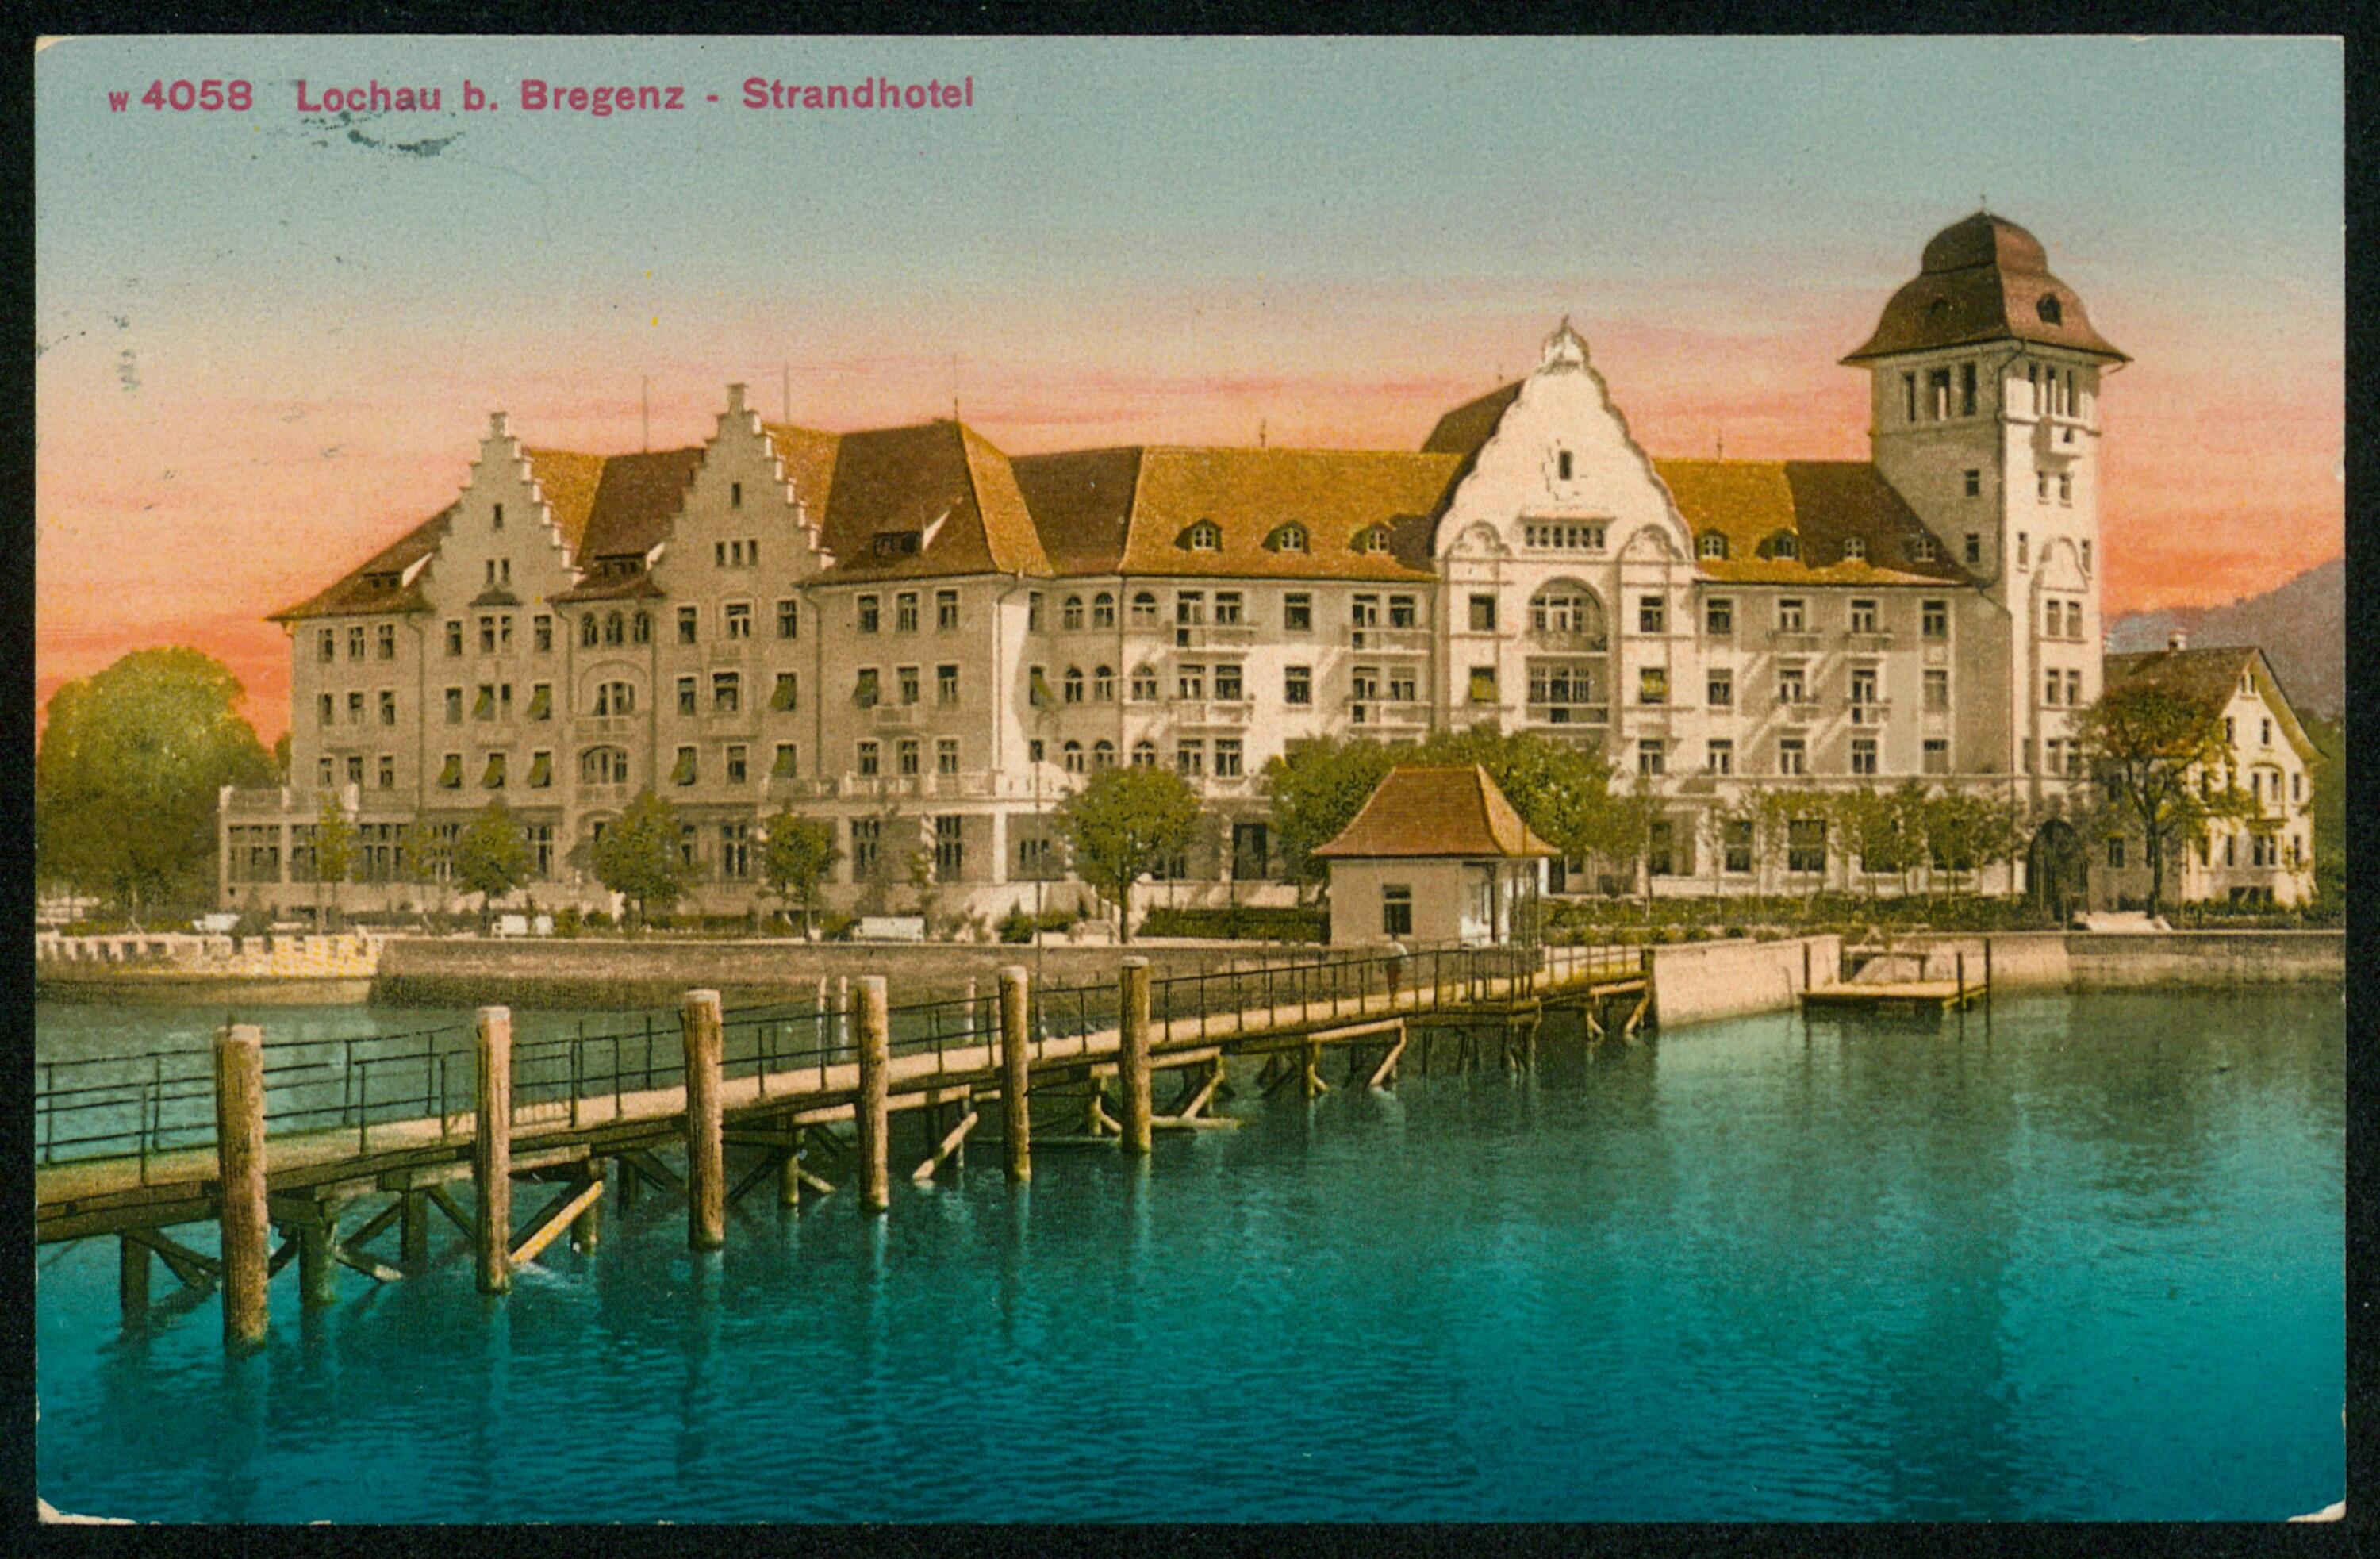 Lochau b. Bregenz - Strandhotel></div>


    <hr>
    <div class=